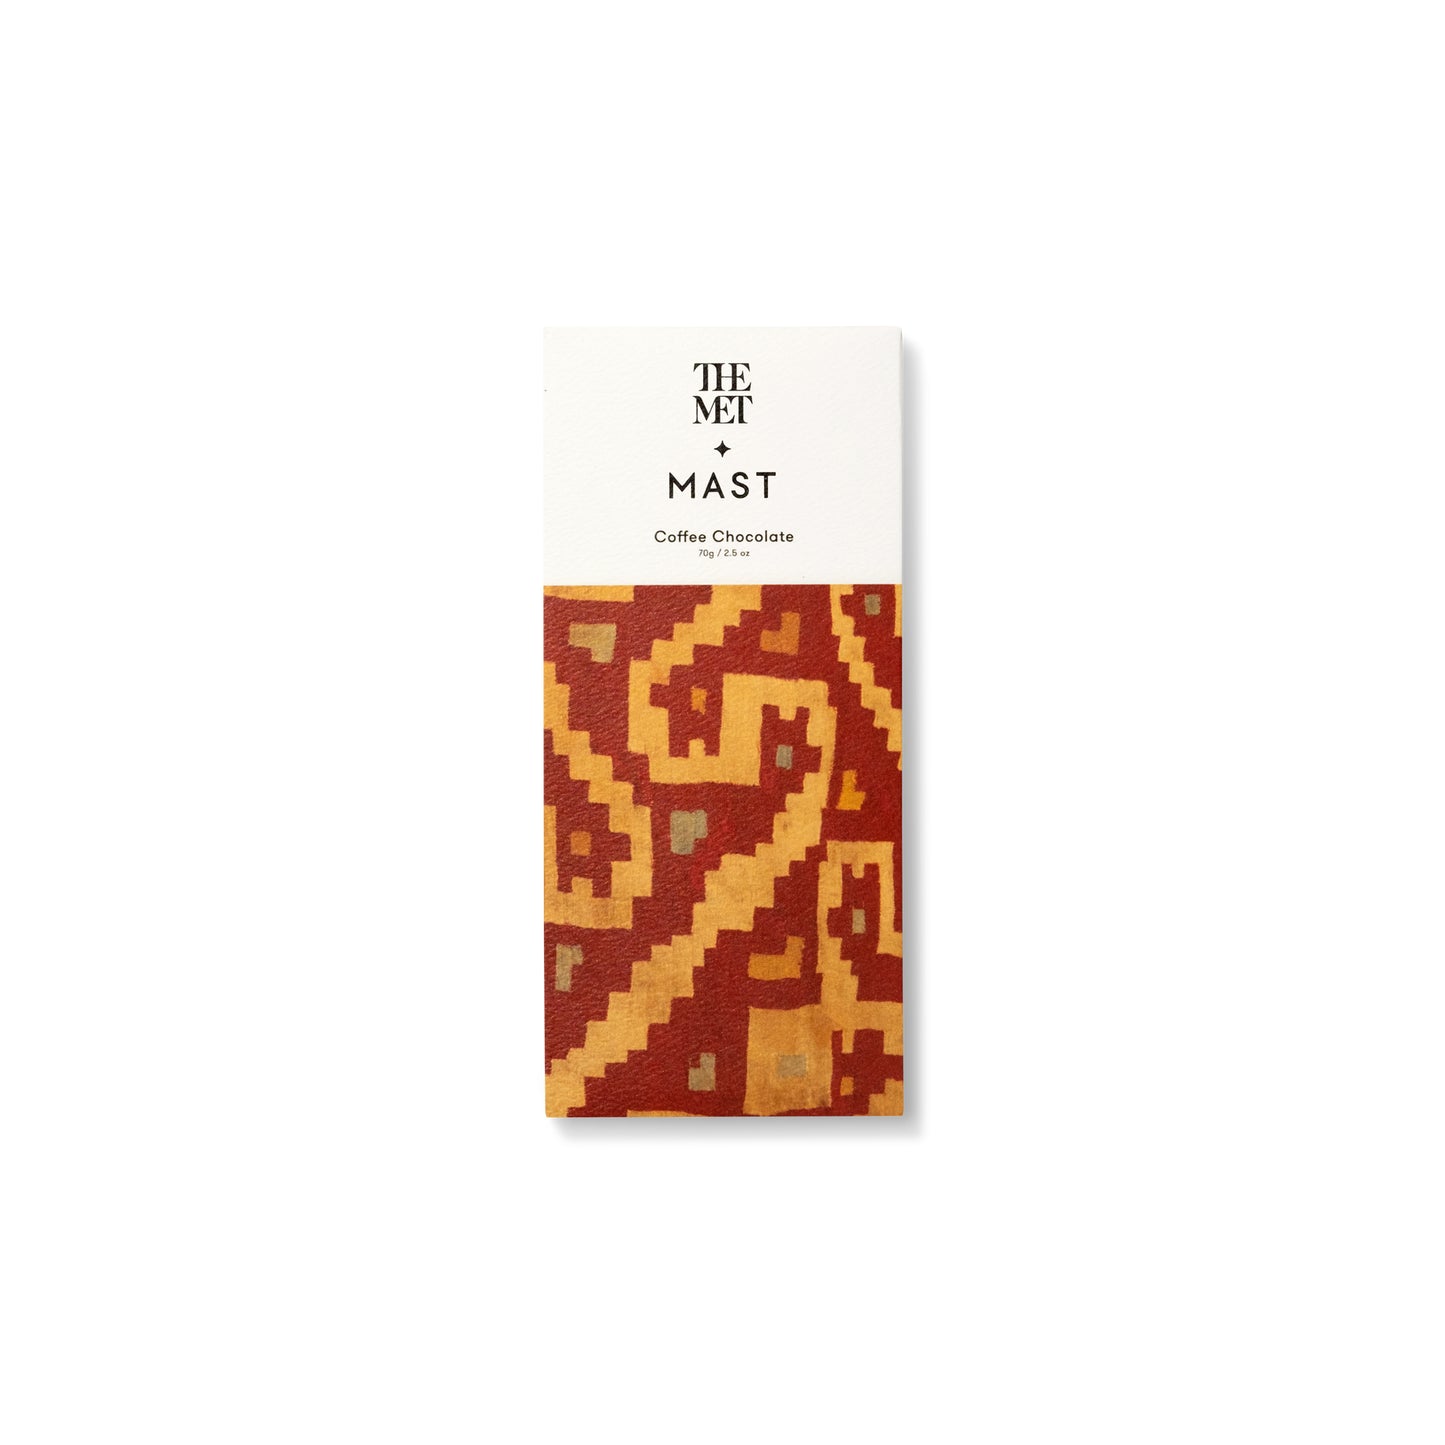 mast / the MET edition - coffee chocolate